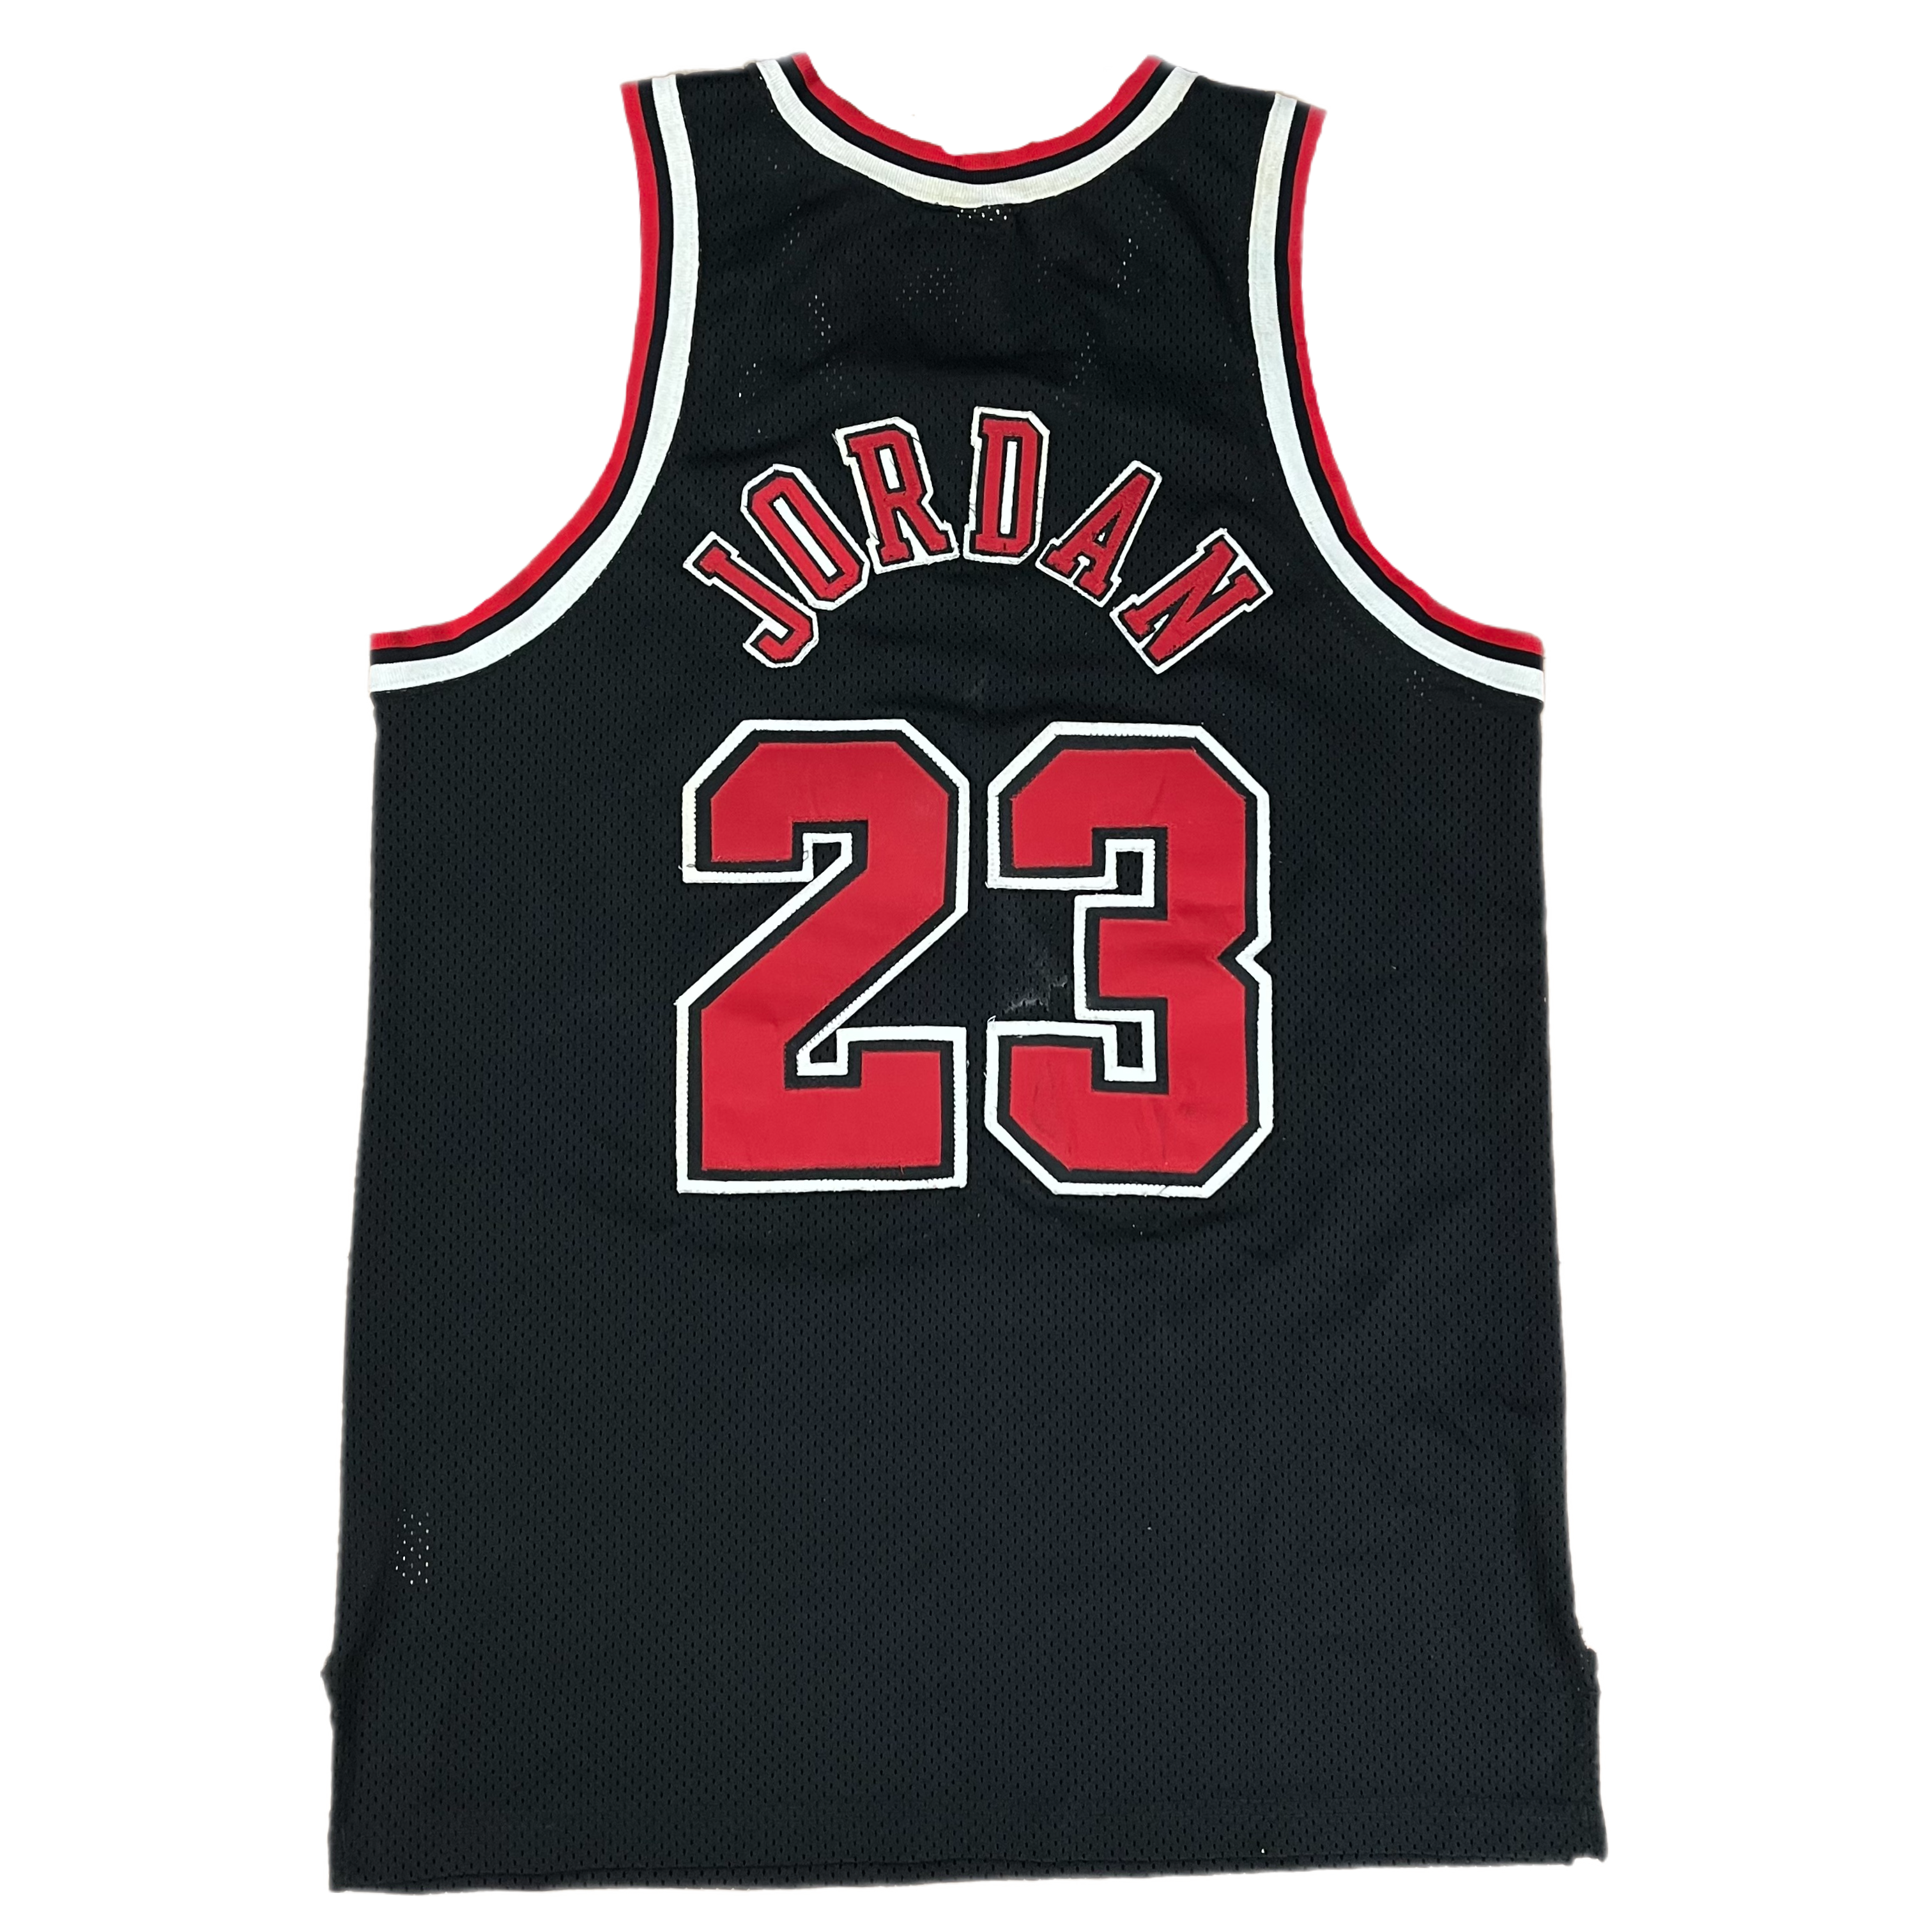 Chicago Bulls Jerseys - Shop the Freshest Vintage or Modern Bulls Jerseys